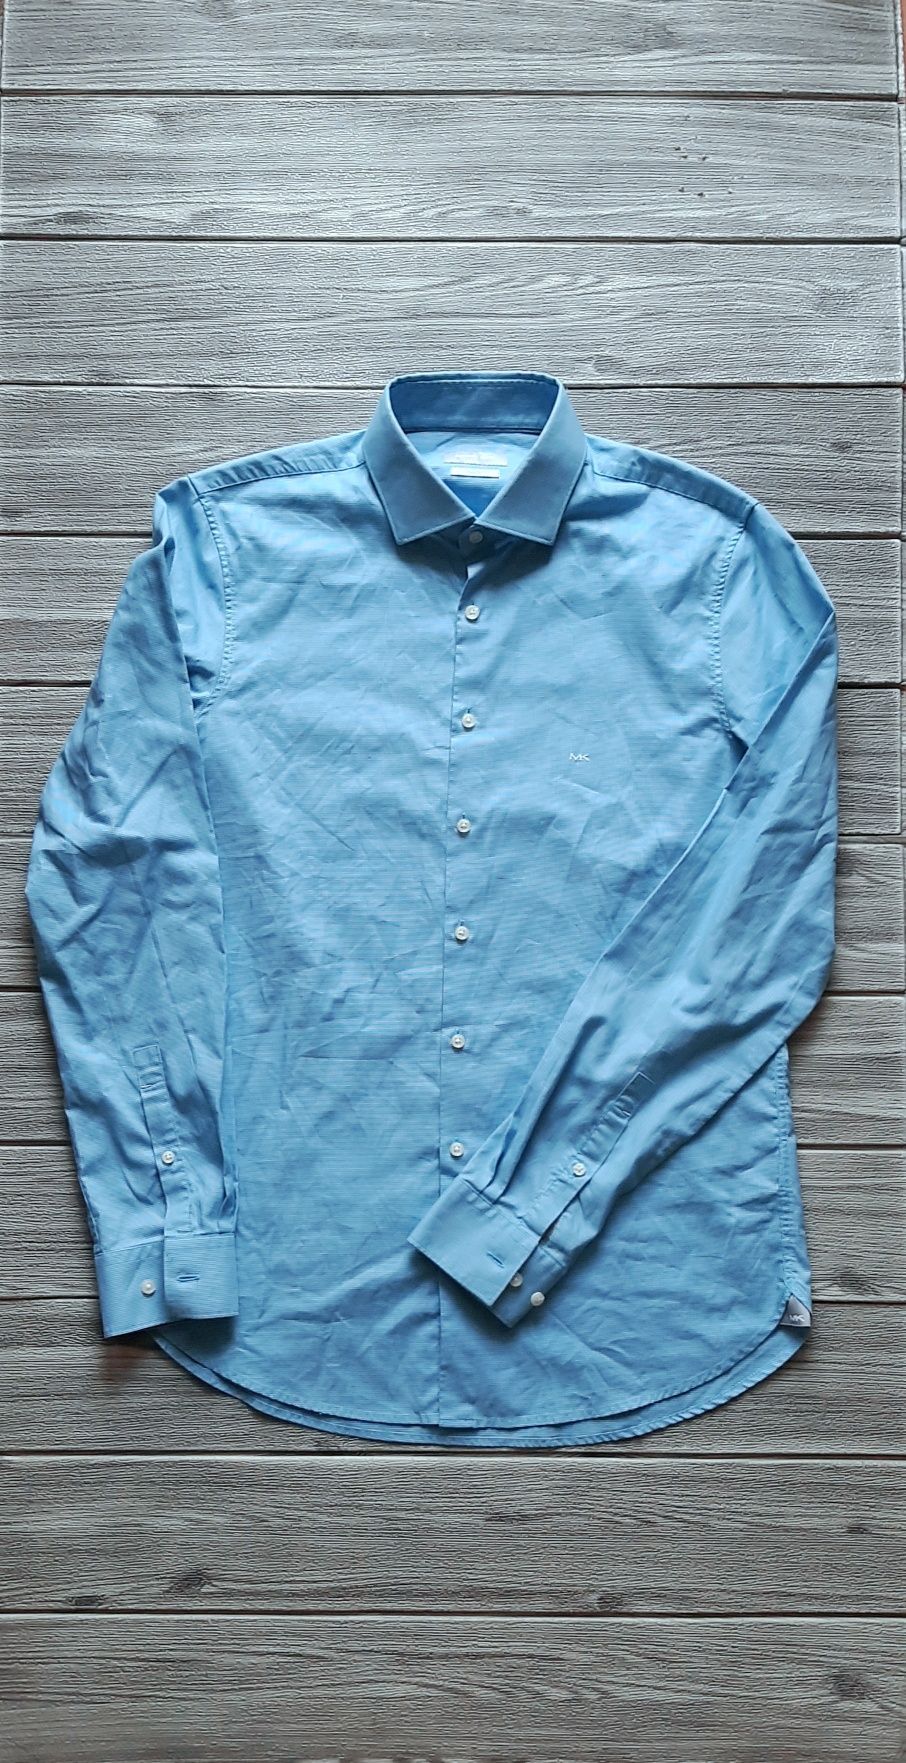 Koszula męska Michael Kors stylowa niebieska slim w kratkę do biura M